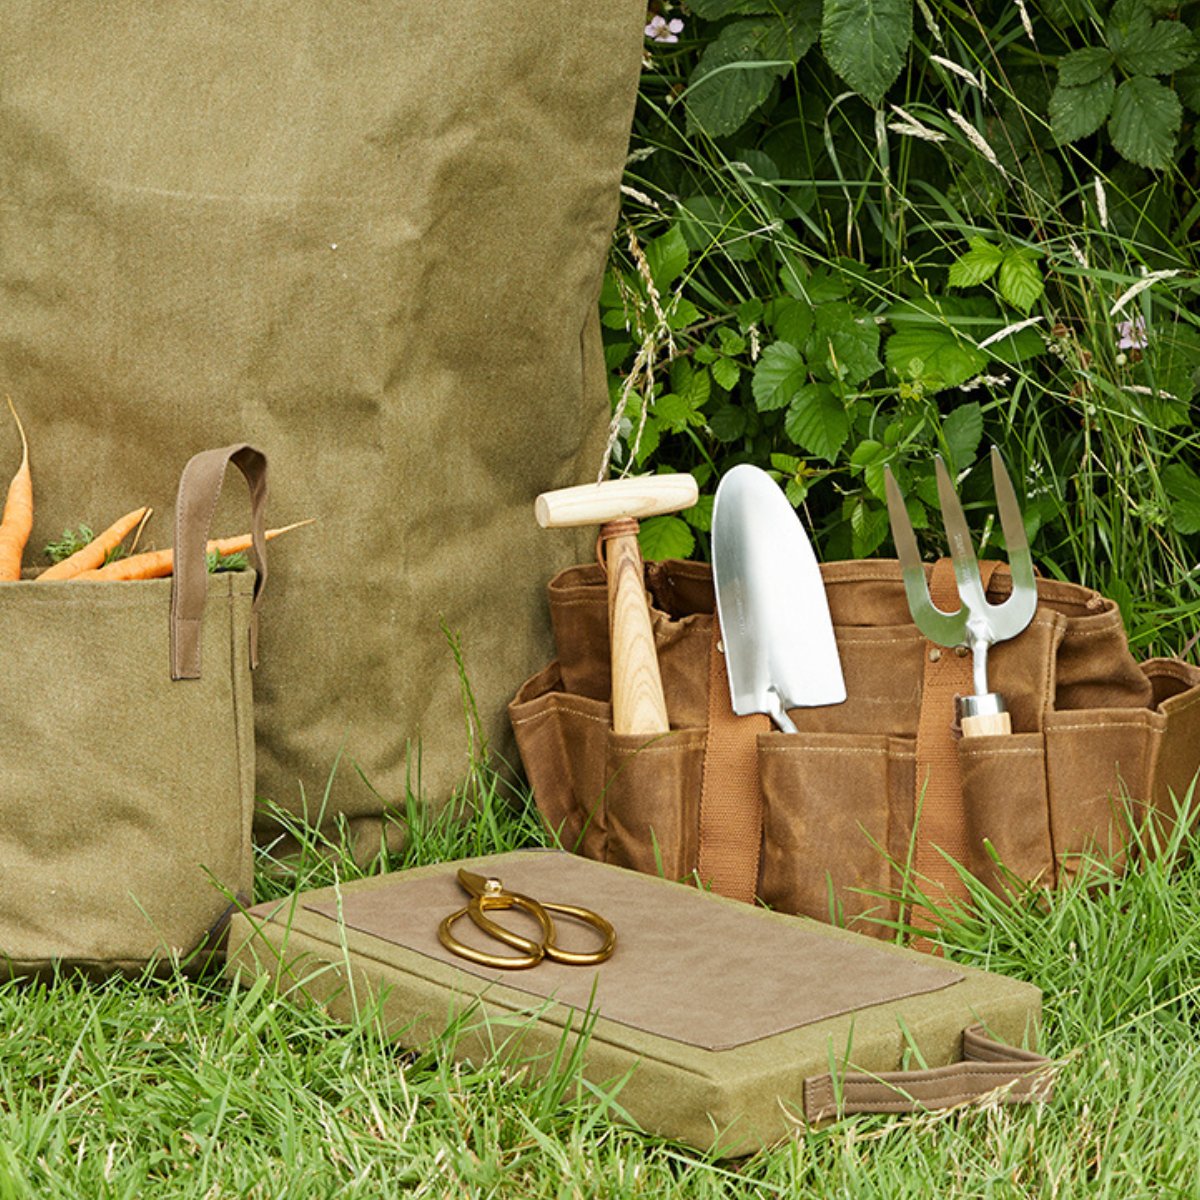 Garden Tools with kneeler and storage bags